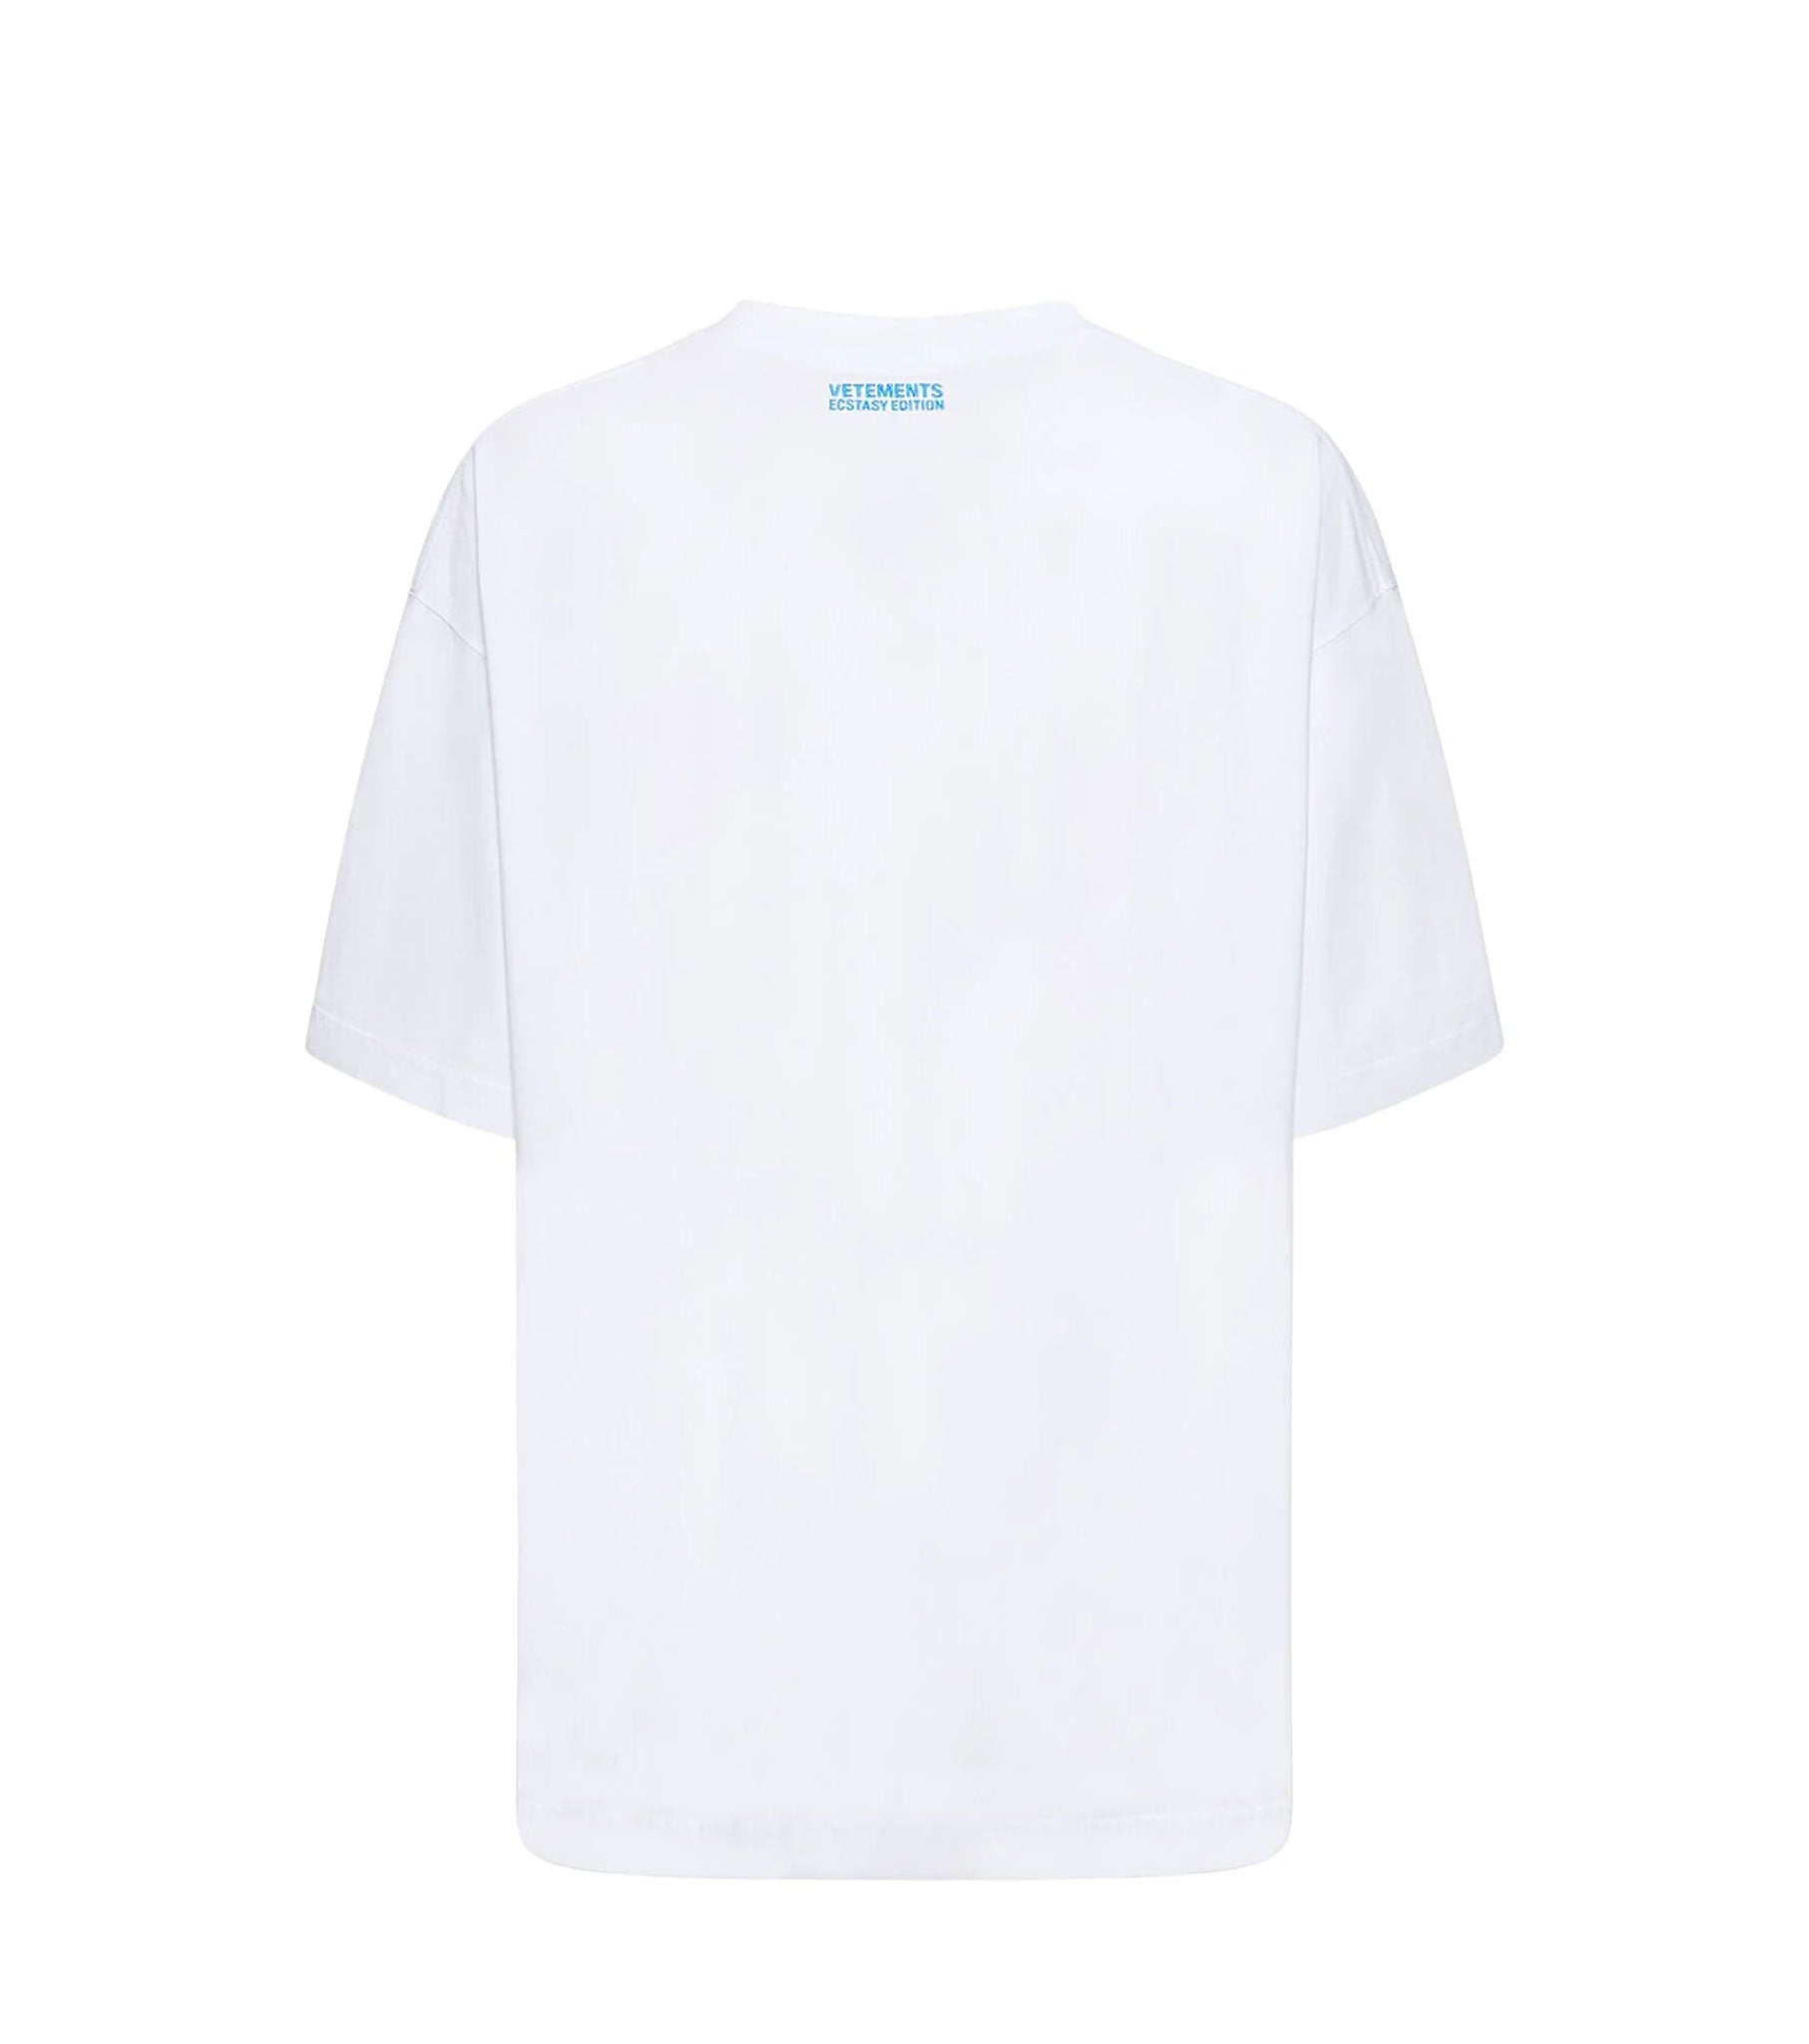 White Unisex Cotton T-shirt